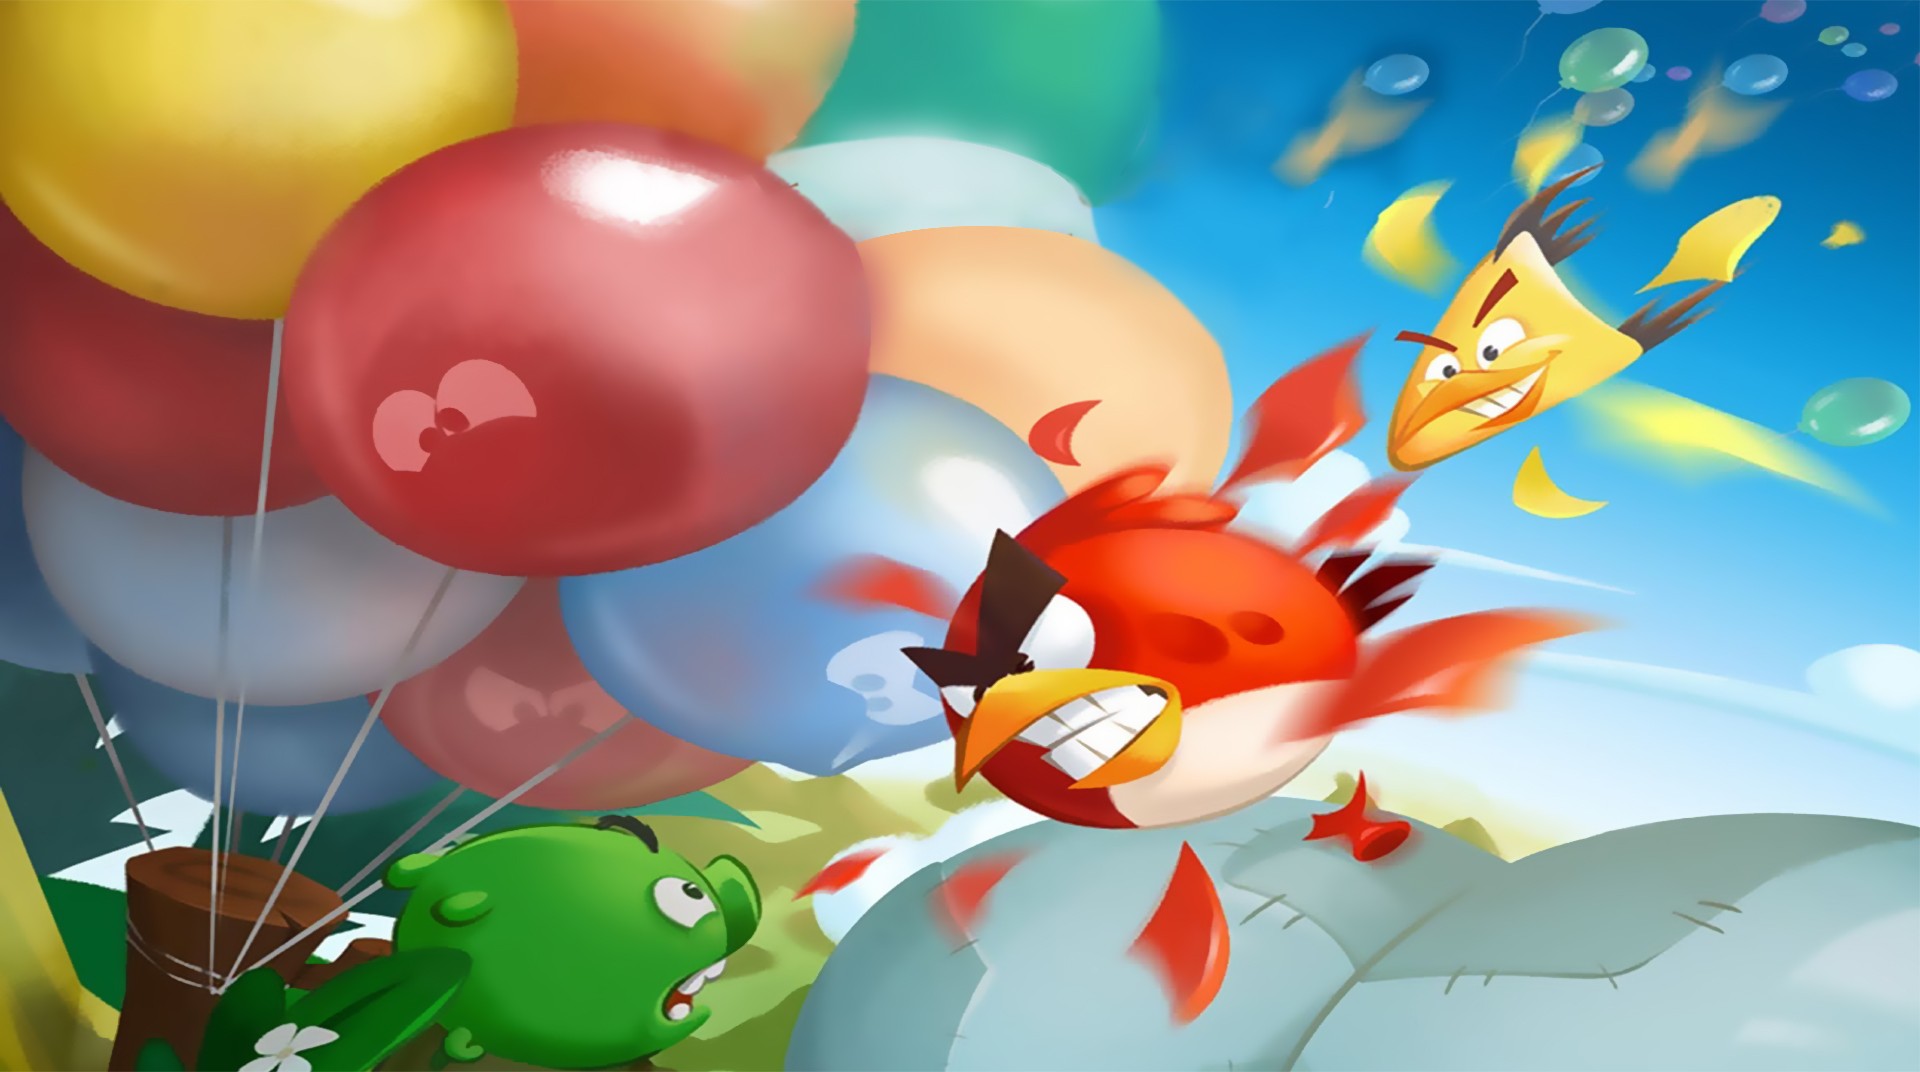 Angry Birds Blast